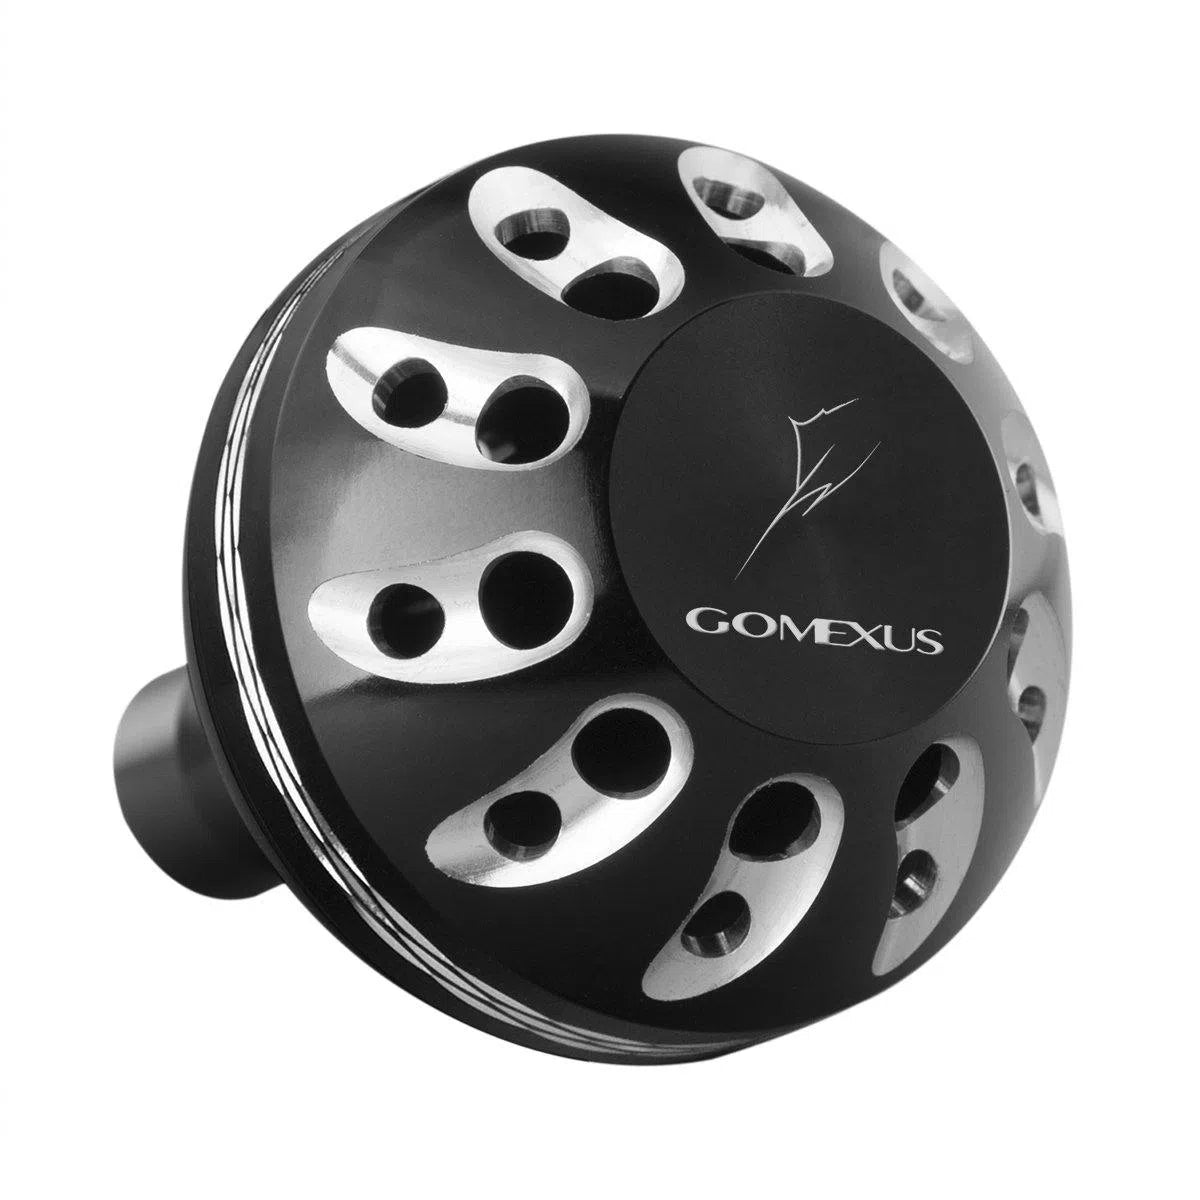 Gomexus CNC Small Spin Reel Power Knob